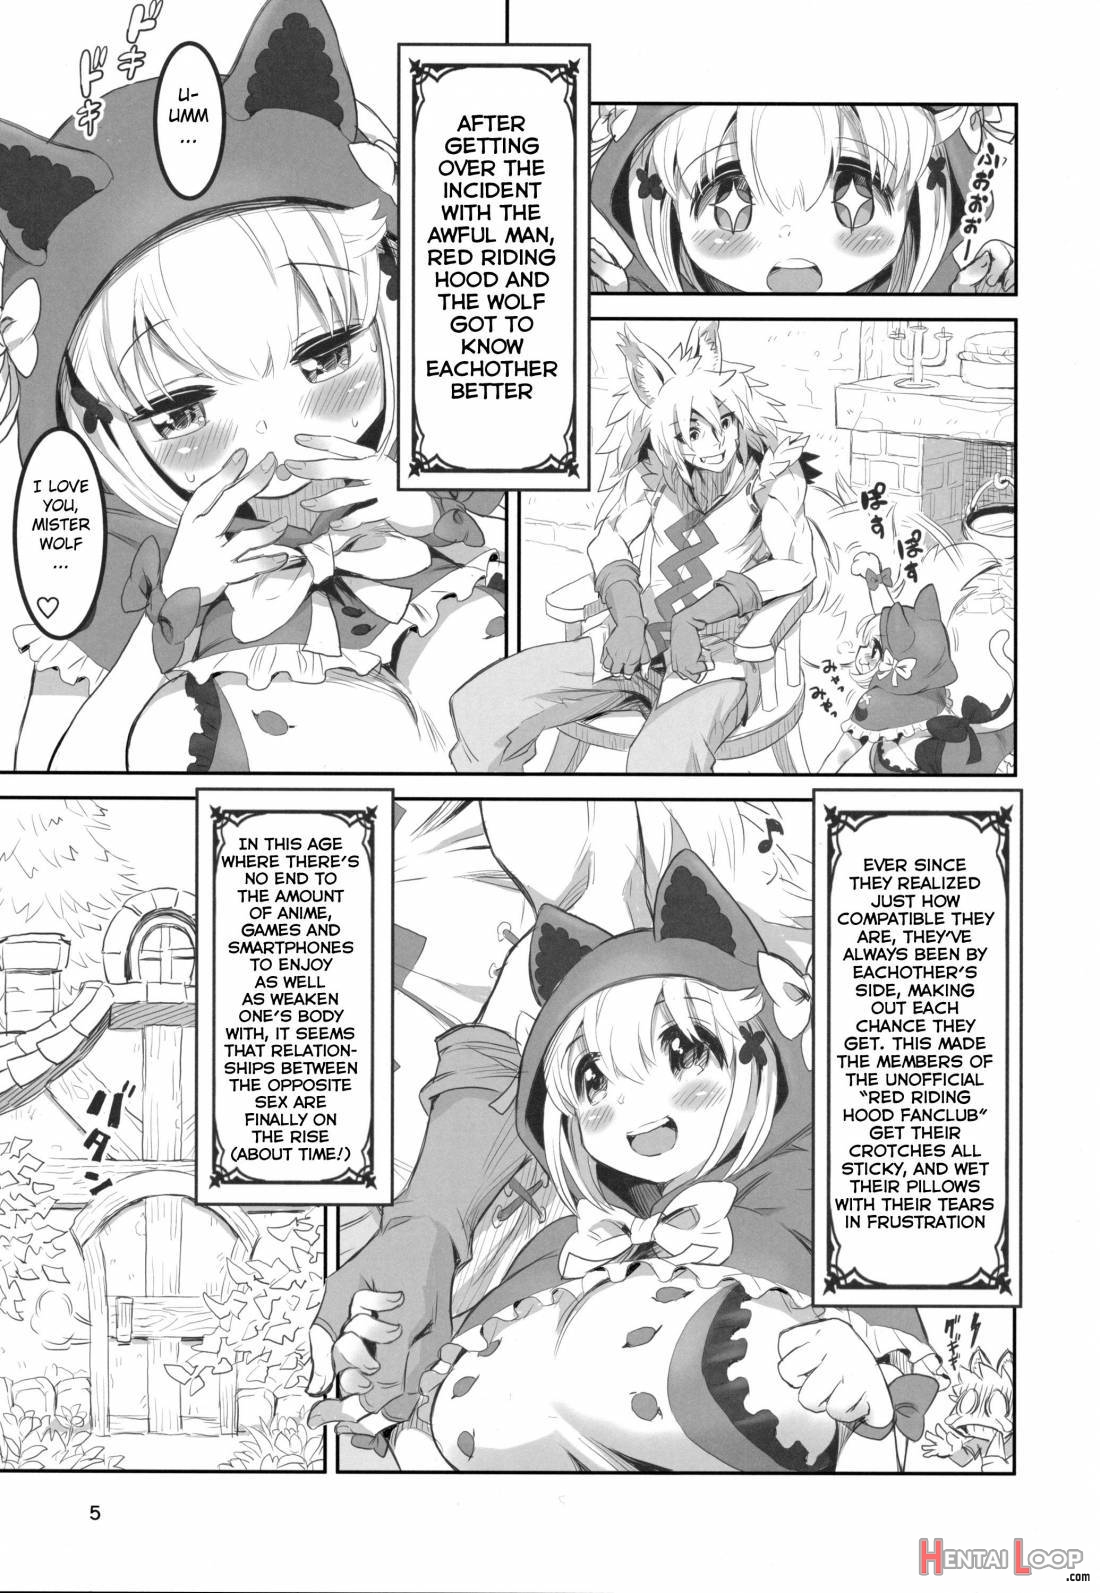 Kemomimi Douwashuu Akazukin-chan page 4